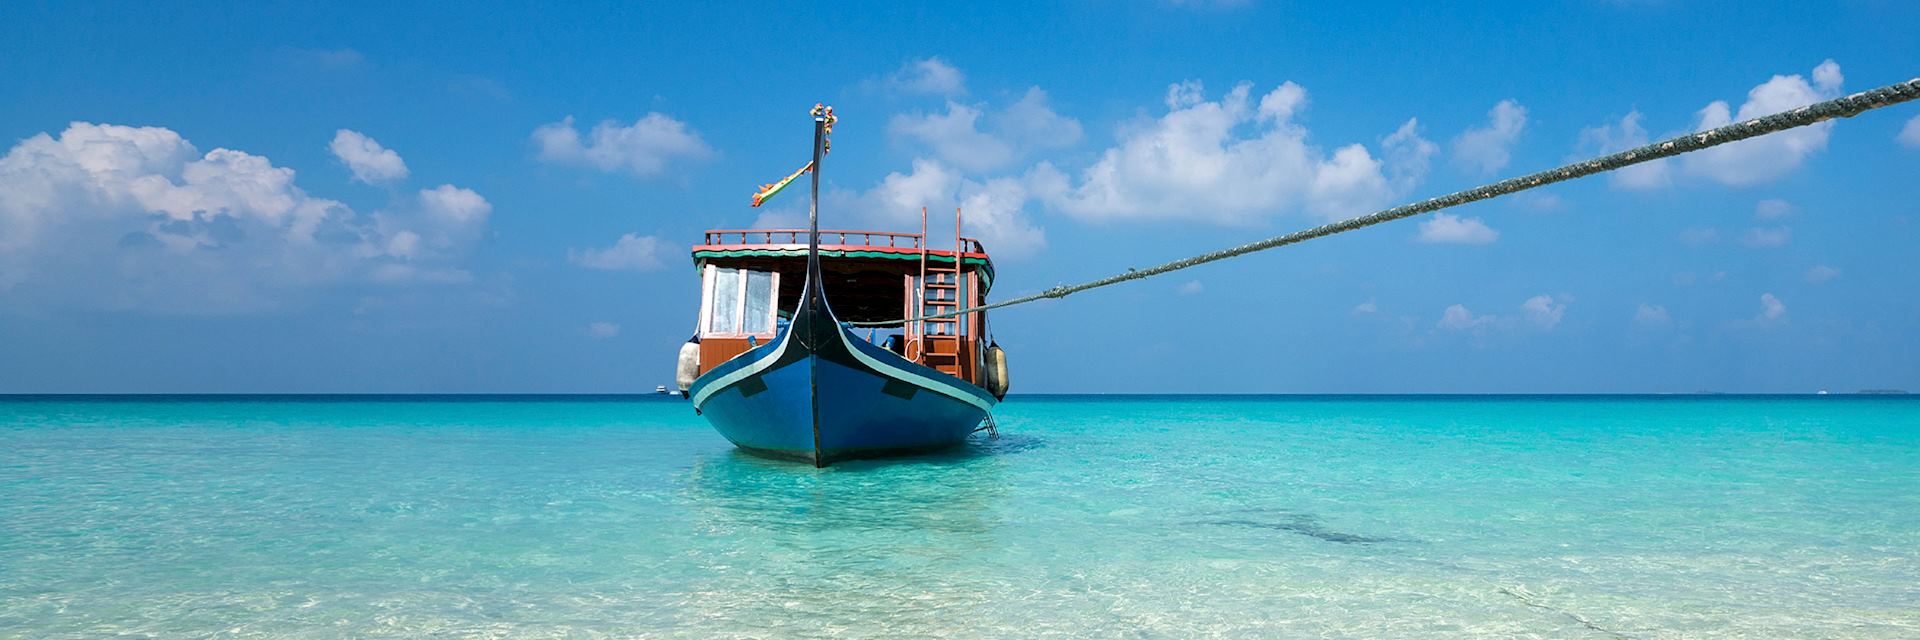 Fishing boat, the Maldives